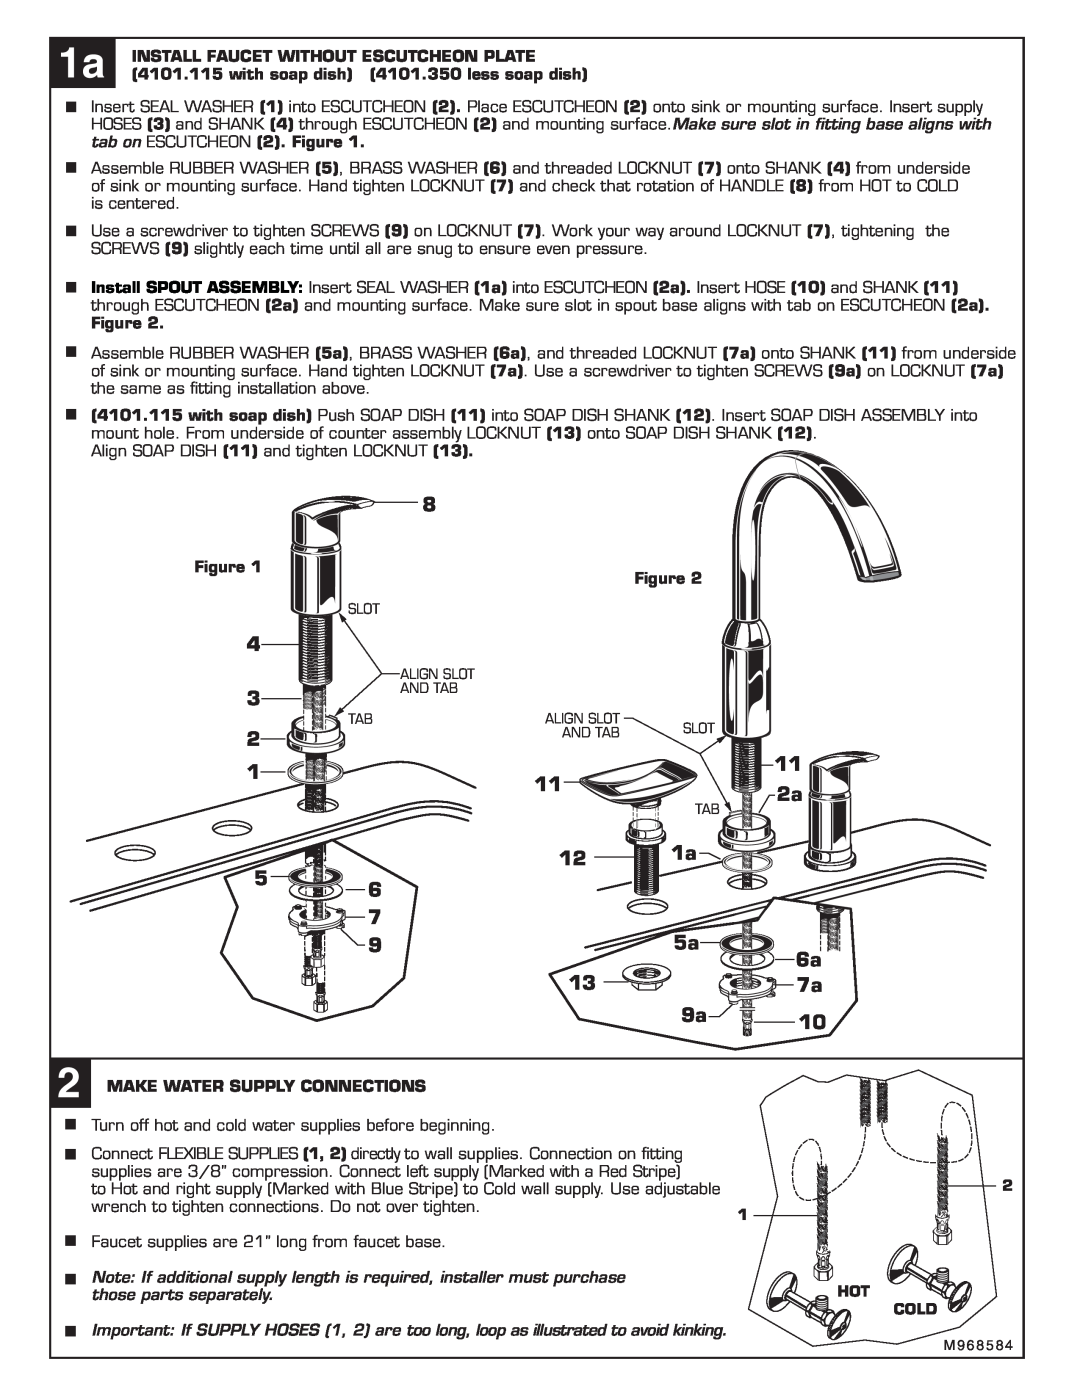 American Standard 4101.115 installation instructions 11 2a 